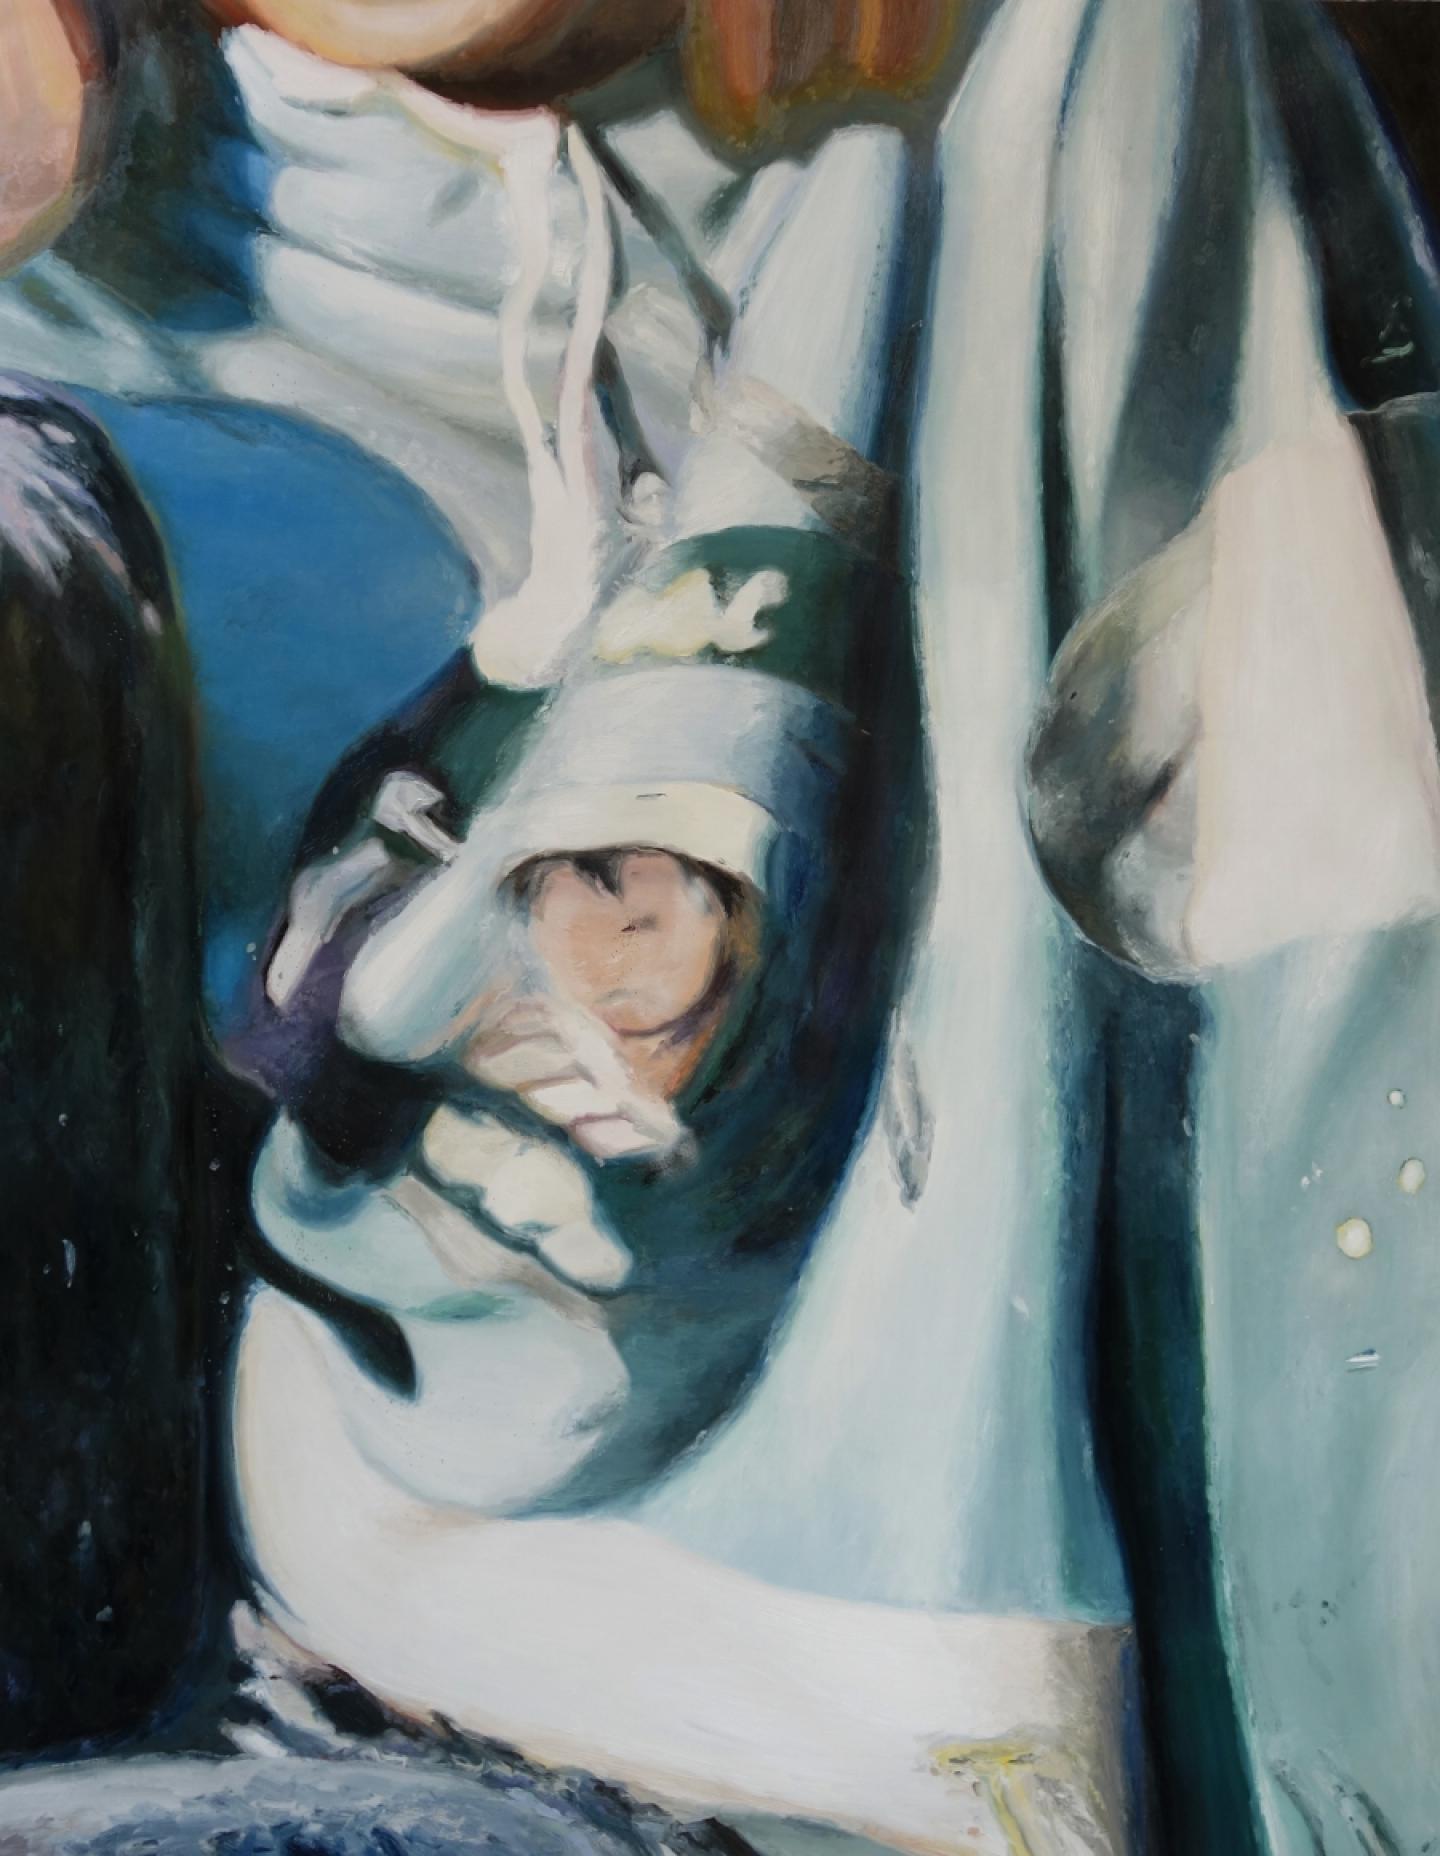 Sweatshirt (bouée) 2018, oil and spray on canvas, 200 x 155 cm